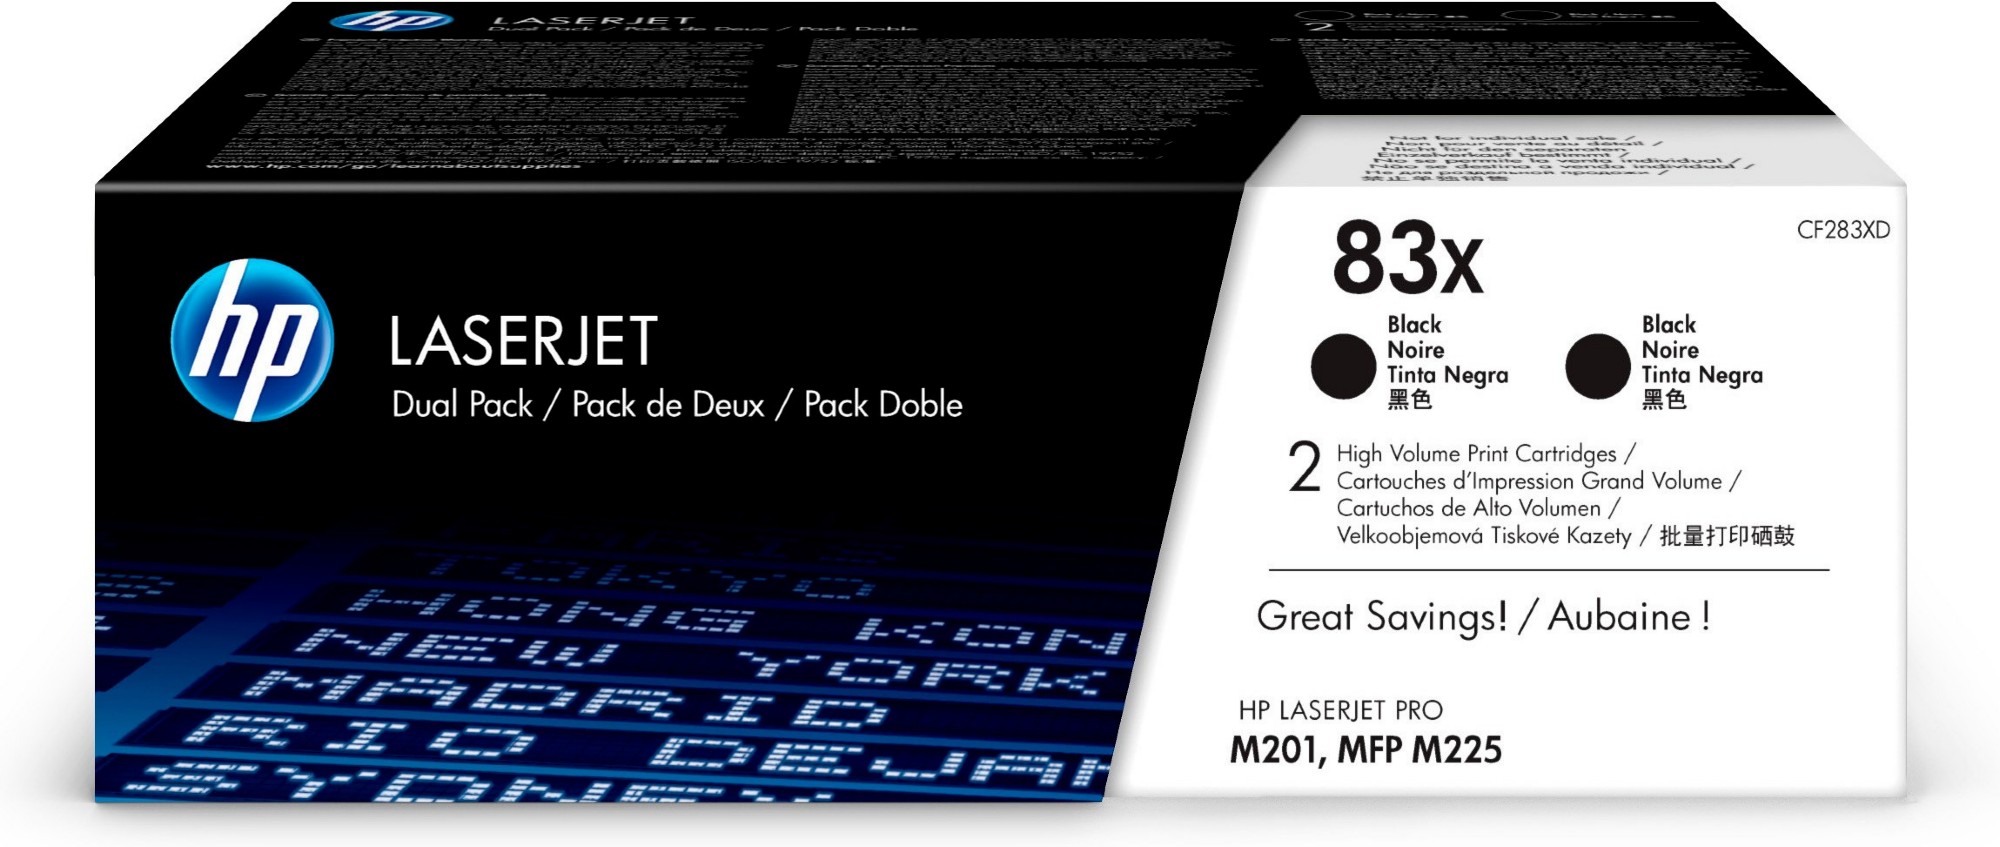 HP LaserJet 5 CF283XD High Capacity Black HP 83X Toner Cartridge Twin Pack, 2.2K Page Yield Each